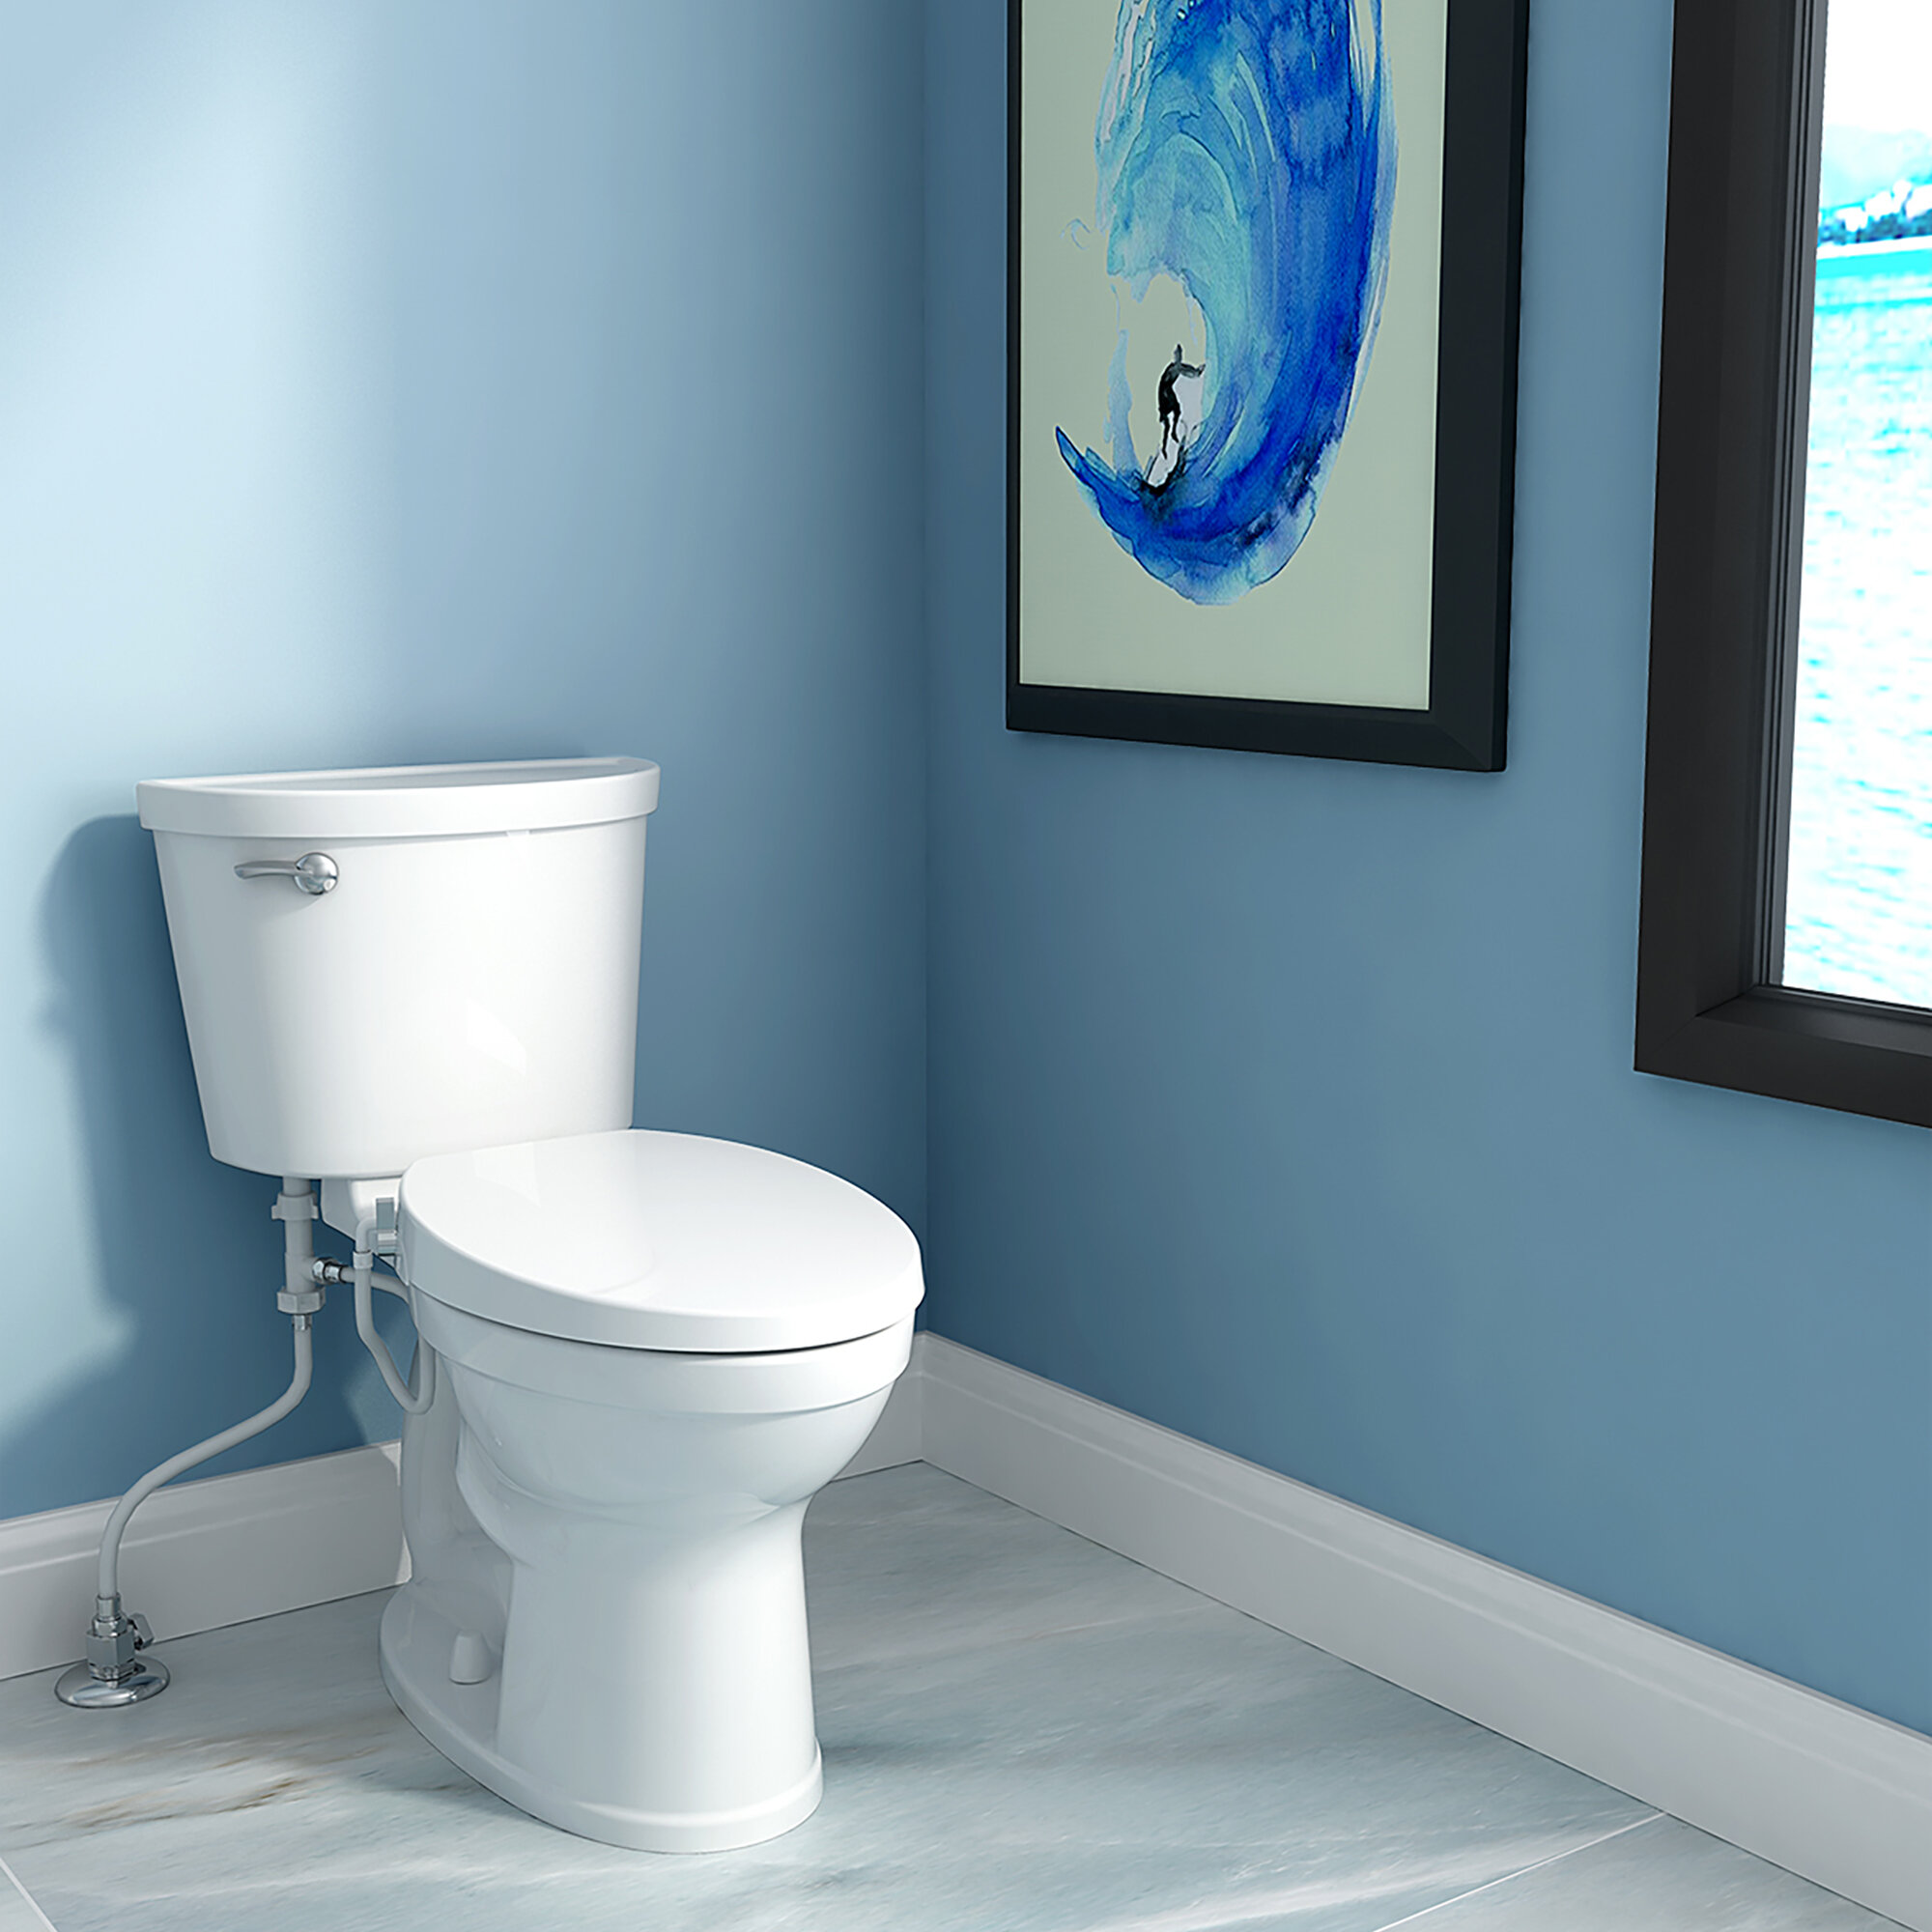 Blue Diamond® Gel Commode Toilet Seat Pad | BD2690